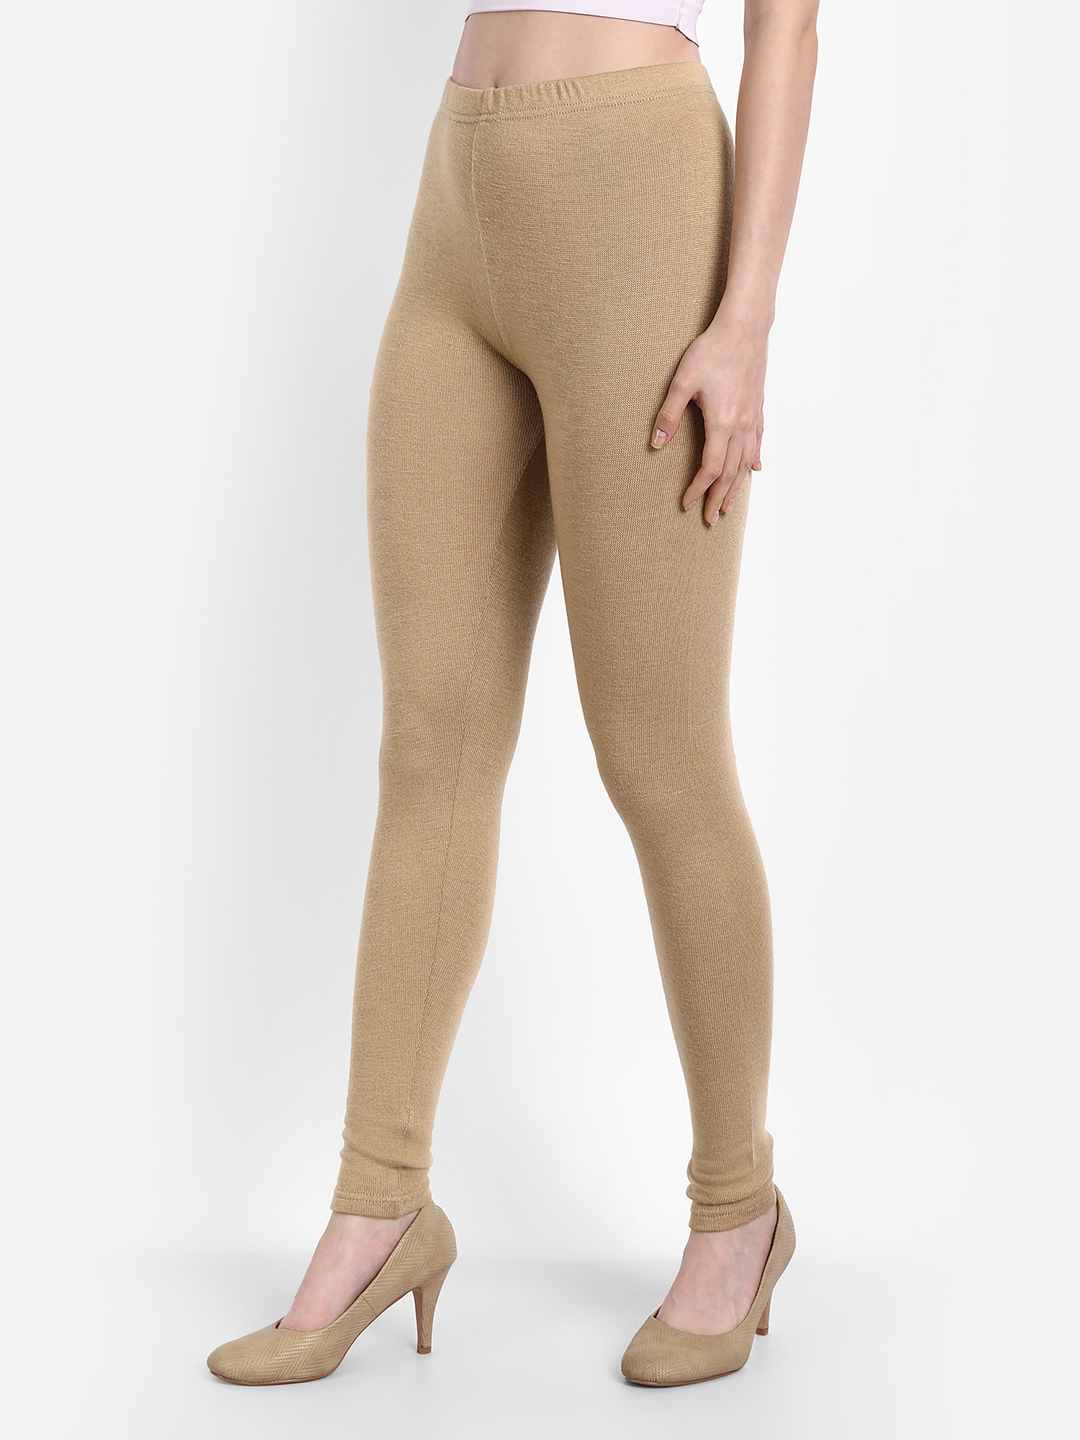 Women High Waist Anti-Cellulite Compression Leggings Slim Tight Pants Leg  Shaper | eBay